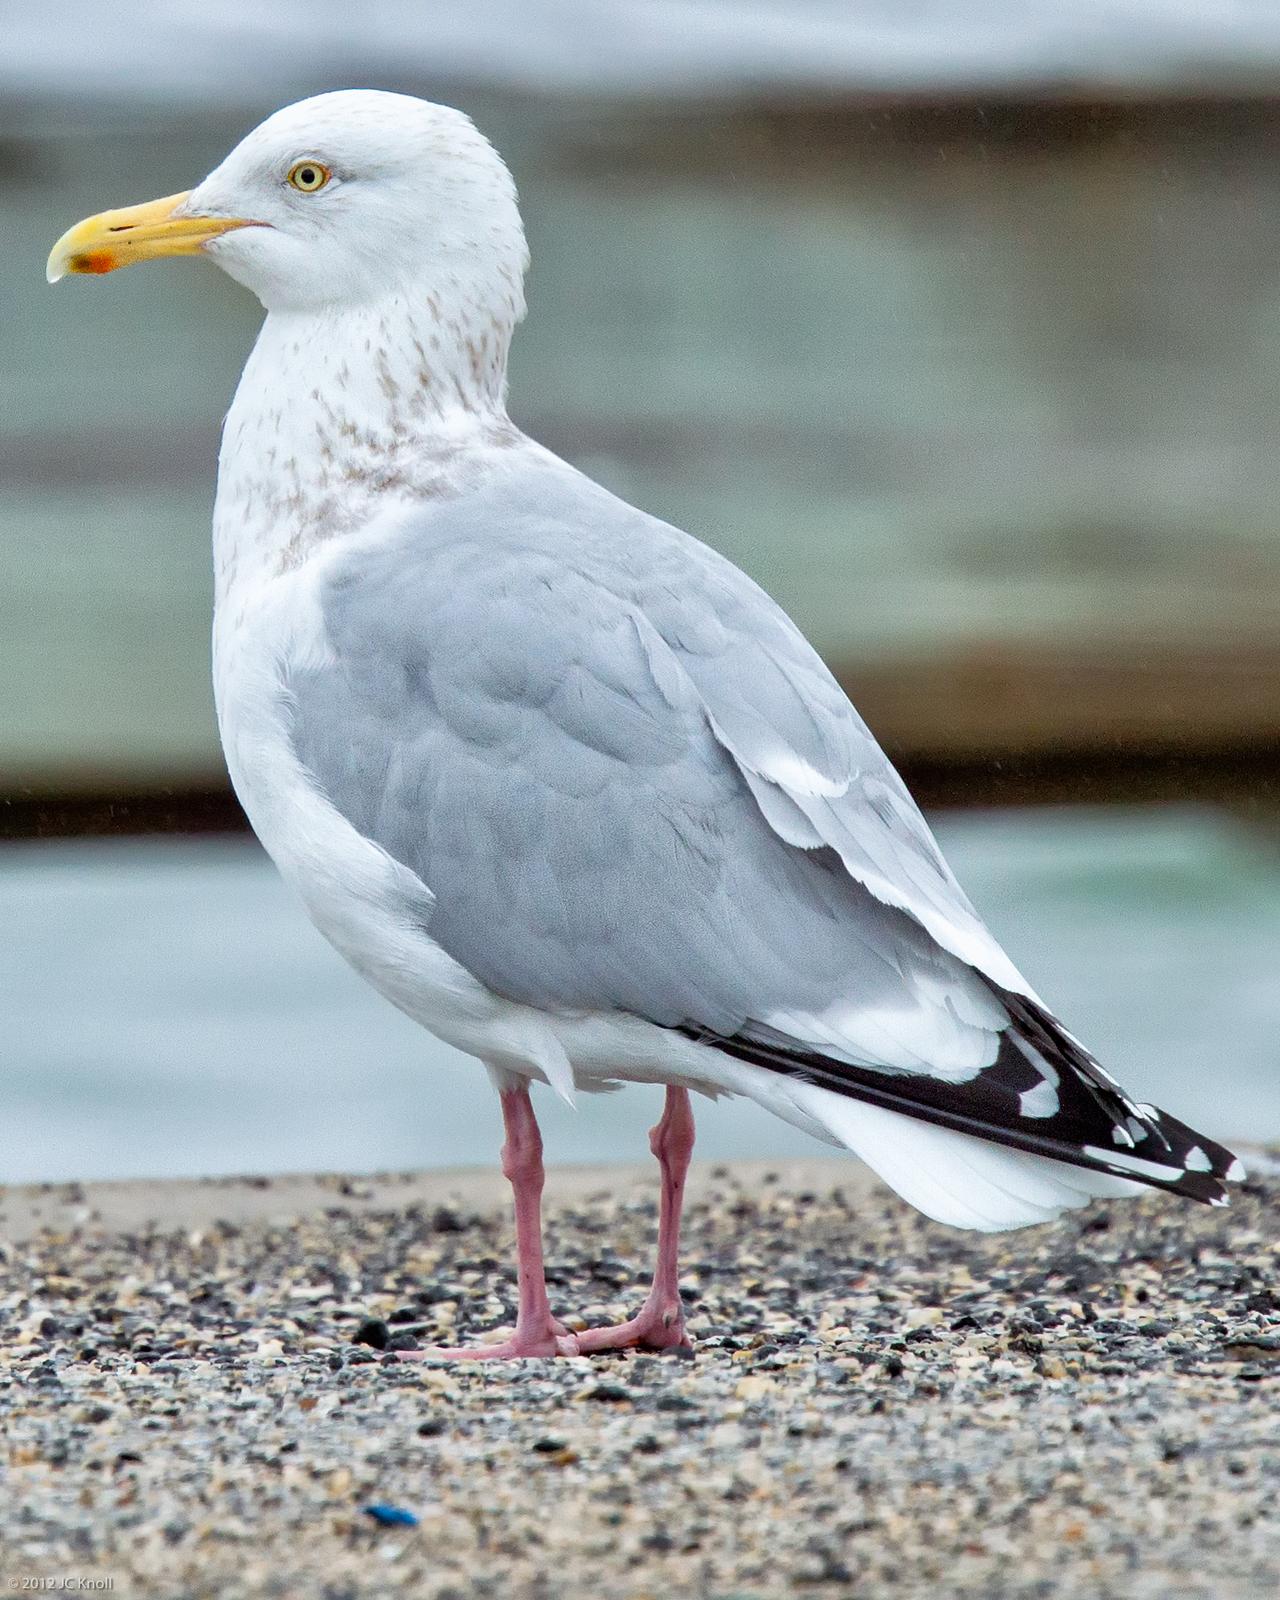 Herring Gull (American) Photo by JC Knoll